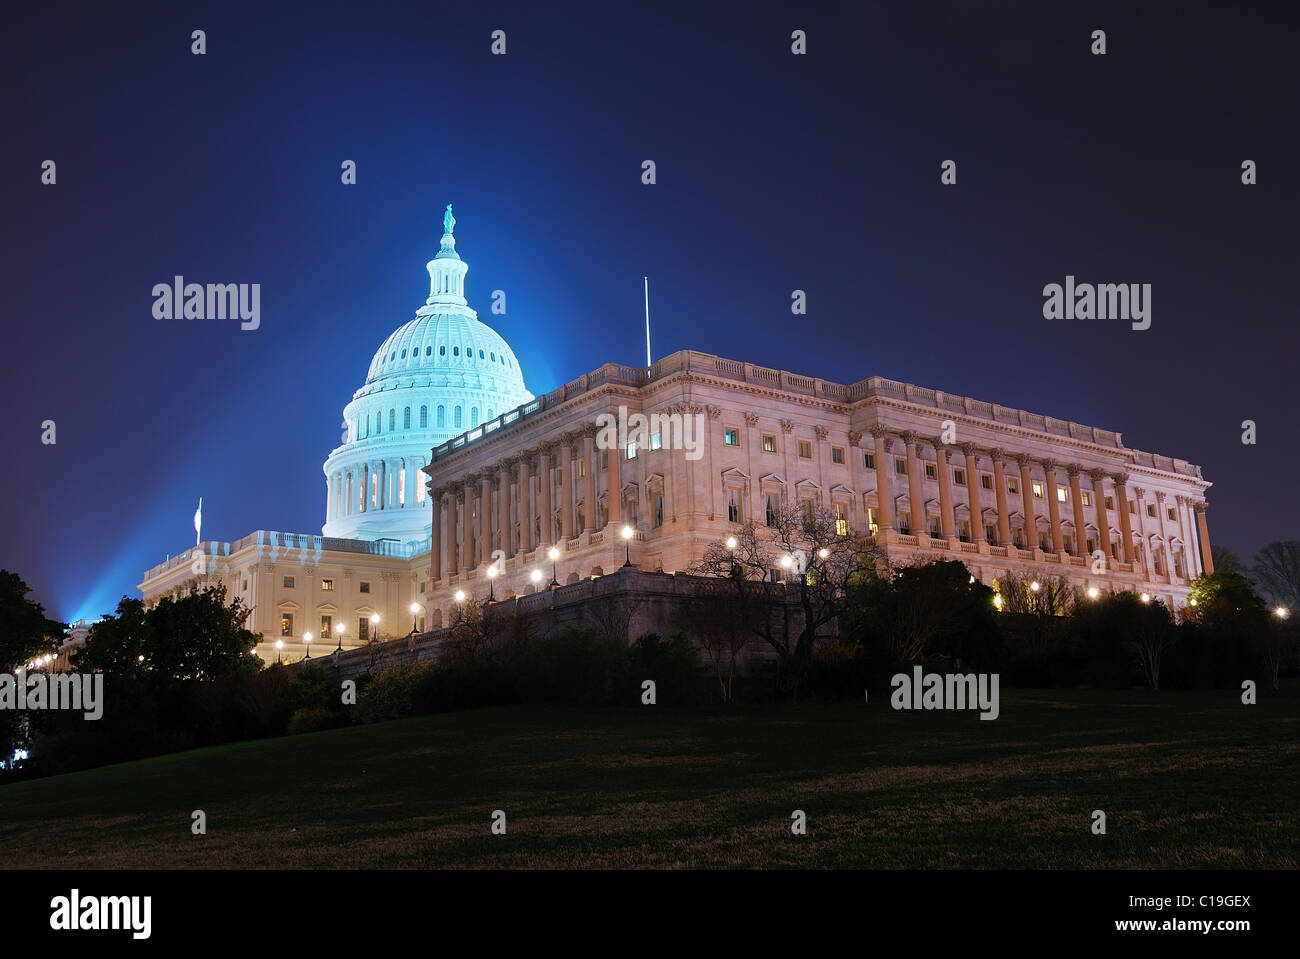 US Capitol hill building at night illuminated with light, Washington DC. Stock Photo